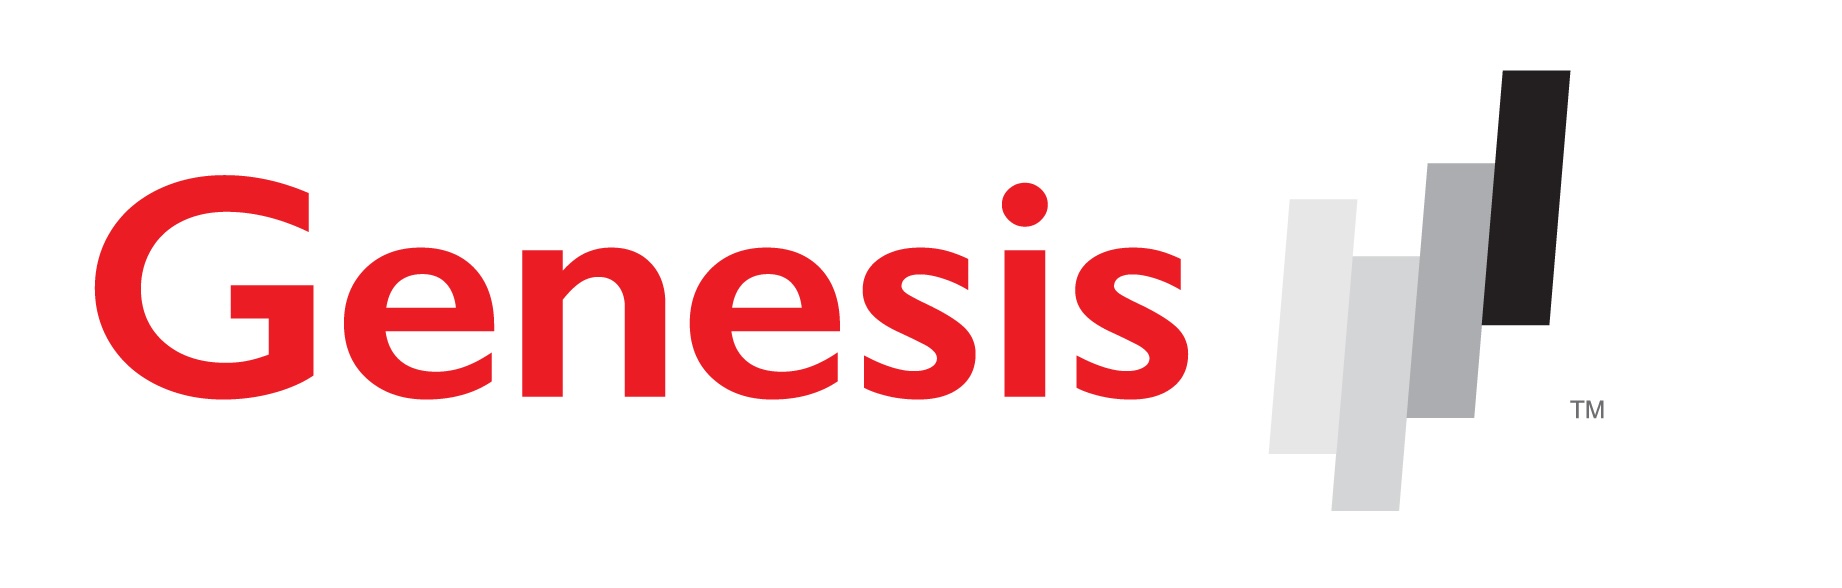 Genesis new logo 2016 LG.jpg